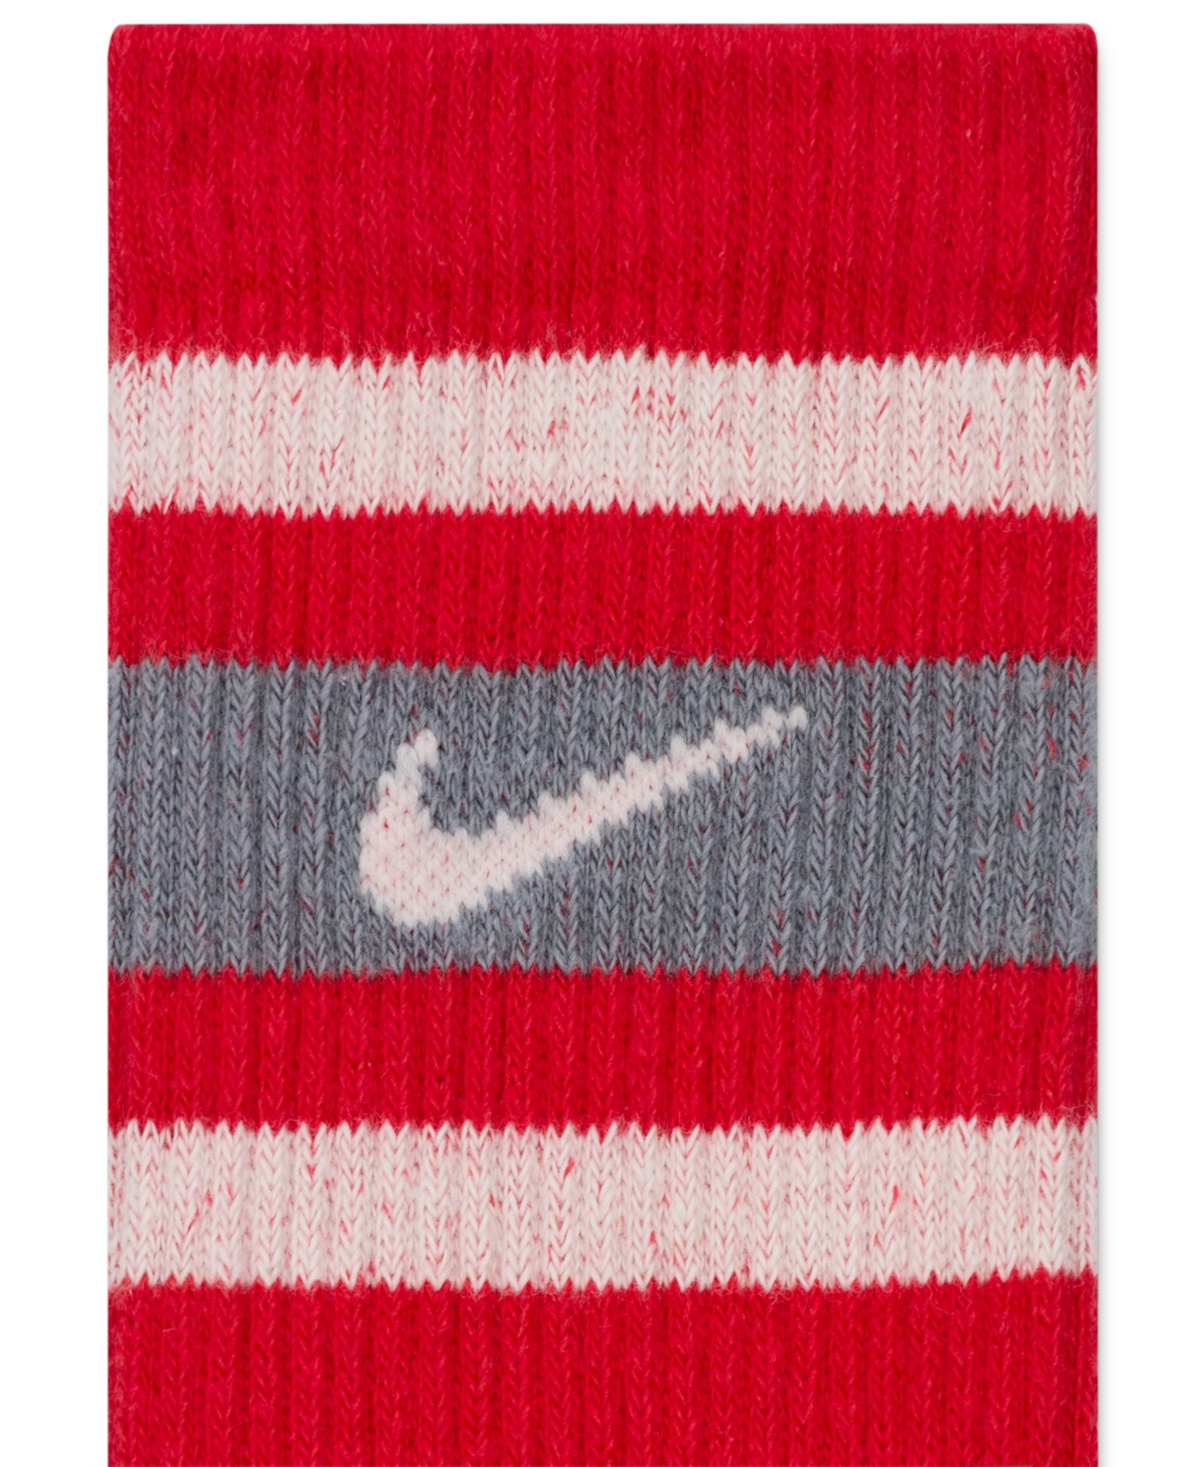 Shop Nike Men's Everyday Plus Cushioned Crew Socks In Multicolor